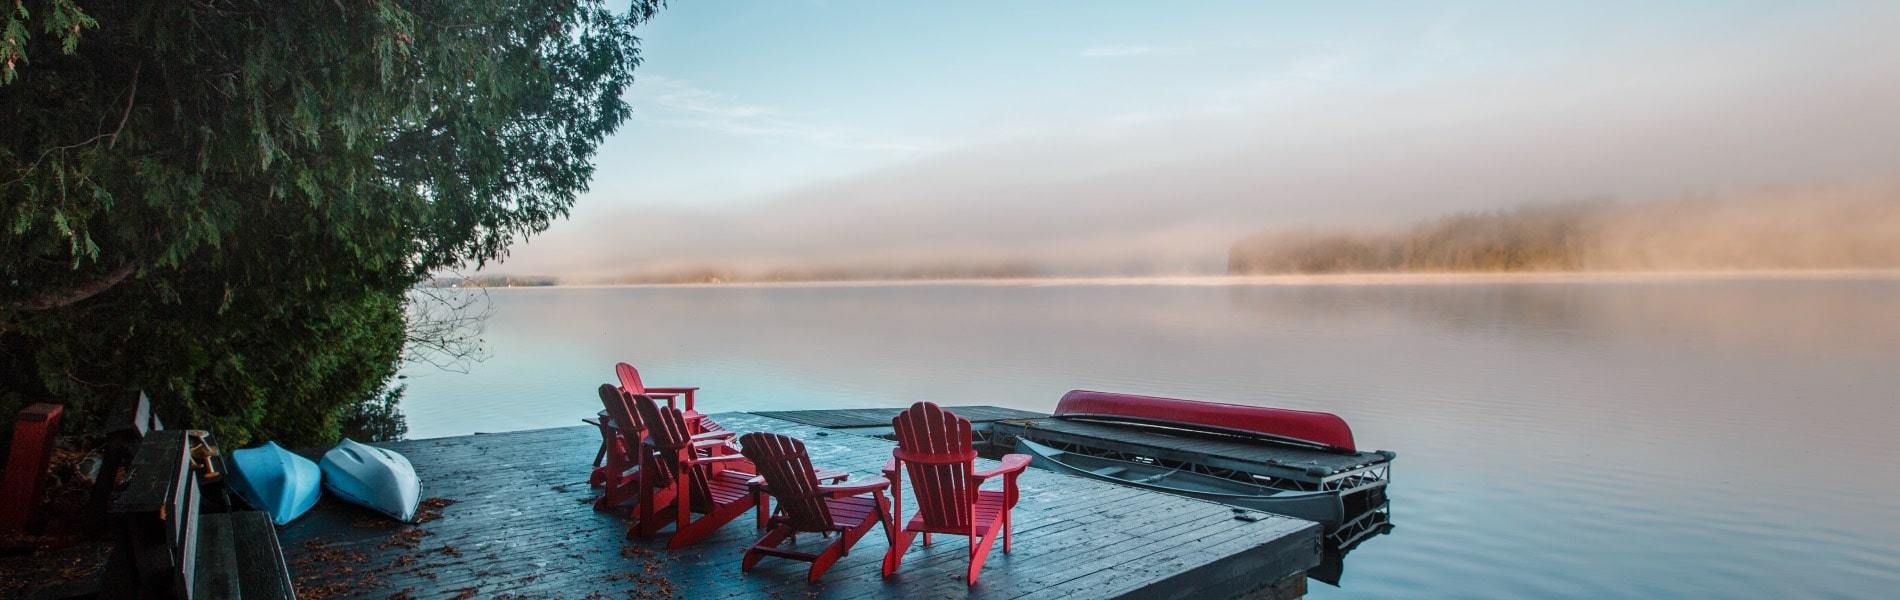 Muskoka chairs sitting on a dock in Ontario overlooking the sunset